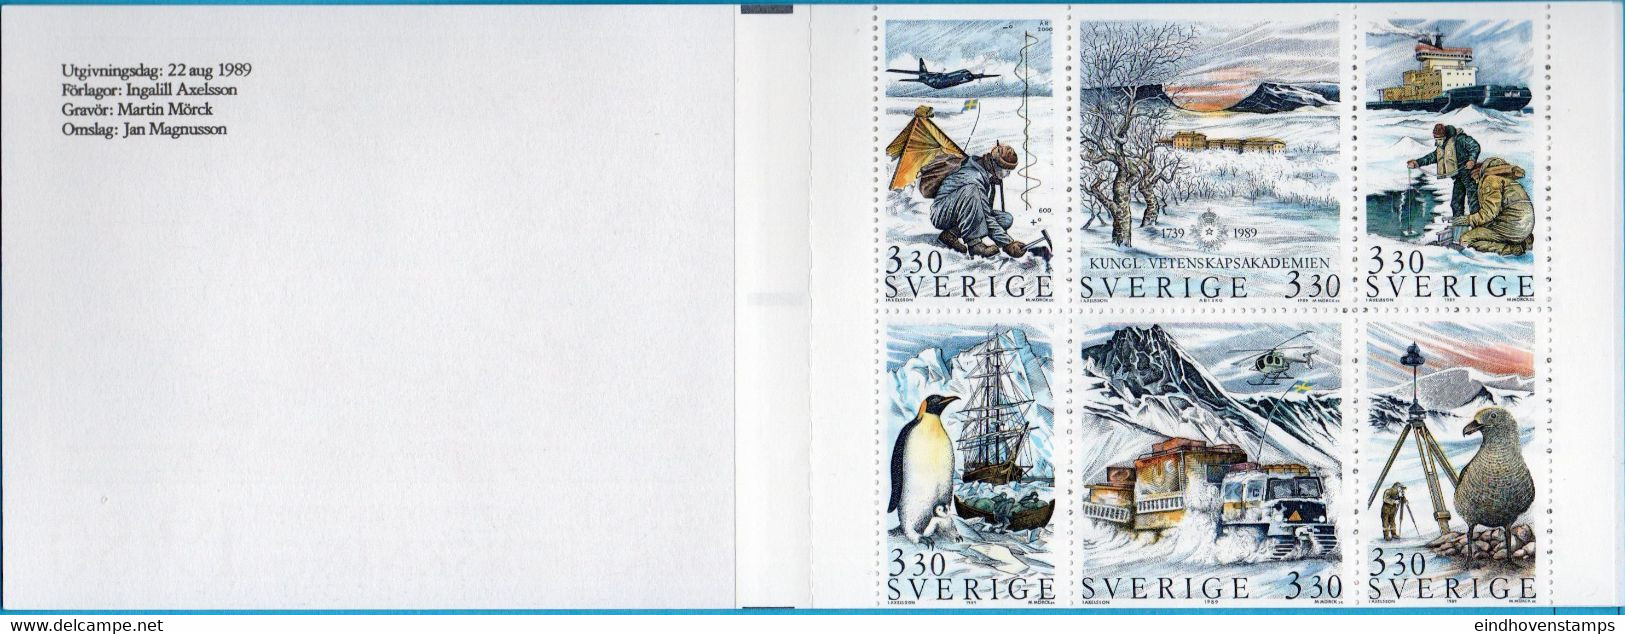 Sweden Sverige 1989 Stamp Booklet Polar Research Cancelled Academy Of Science MNH 89M141 - Programmes Scientifiques